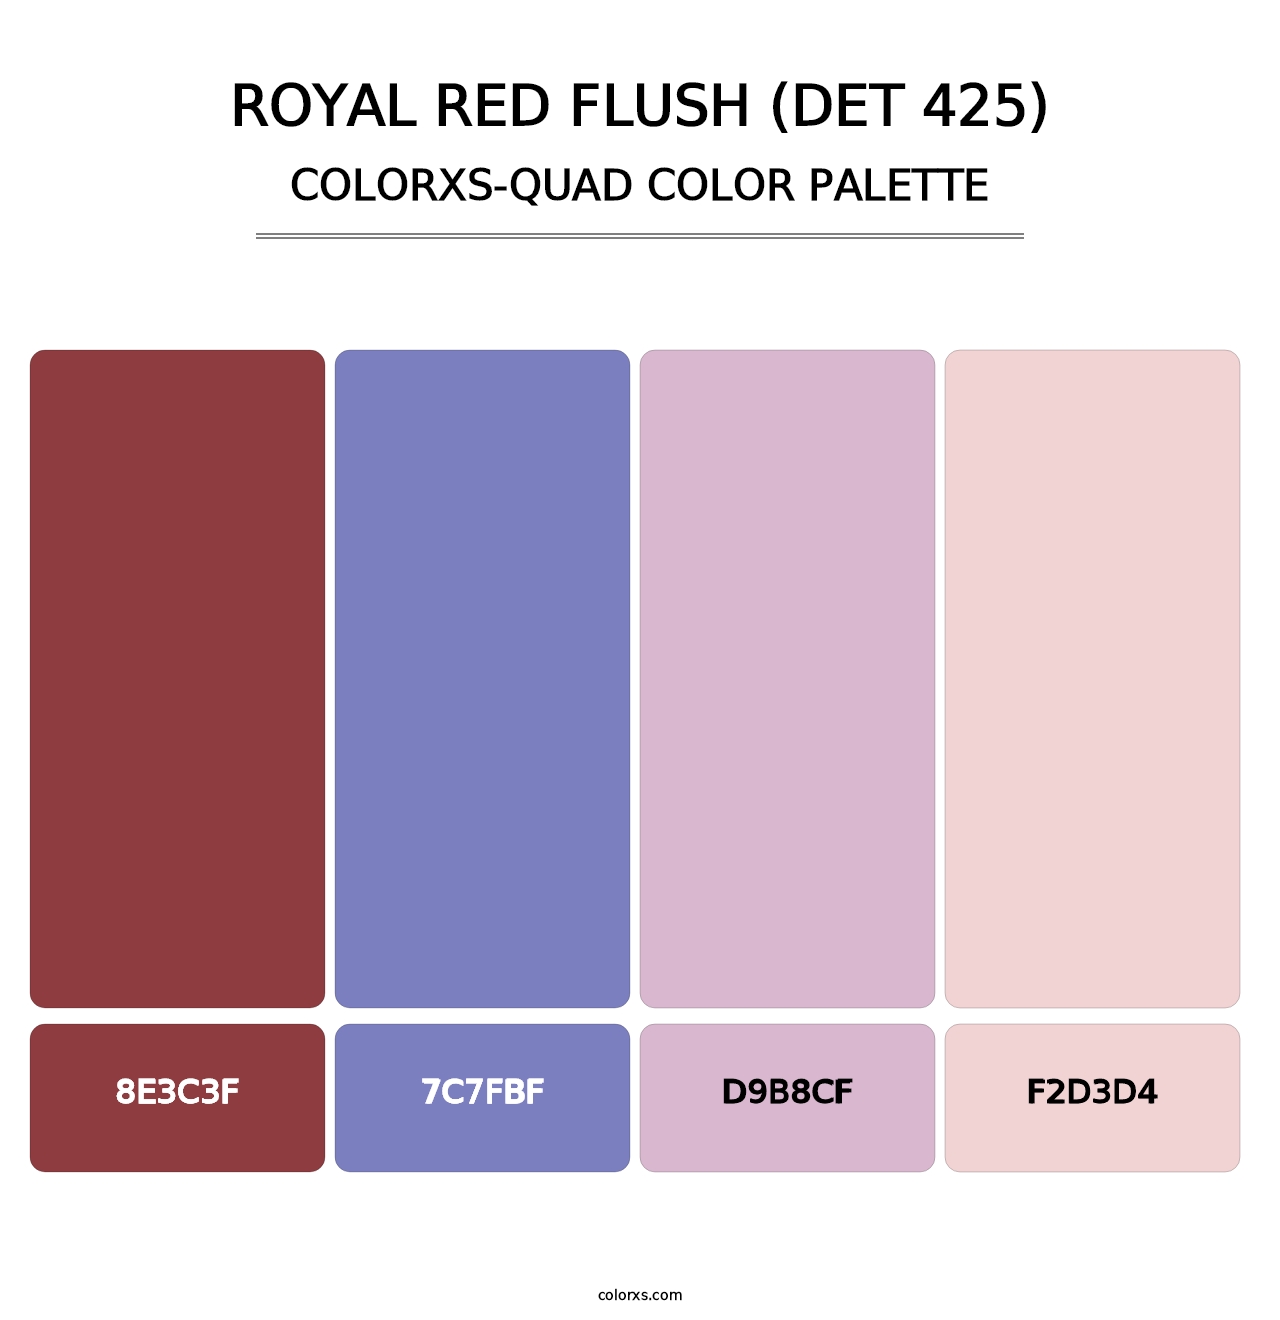 Royal Red Flush (DET 425) - Colorxs Quad Palette